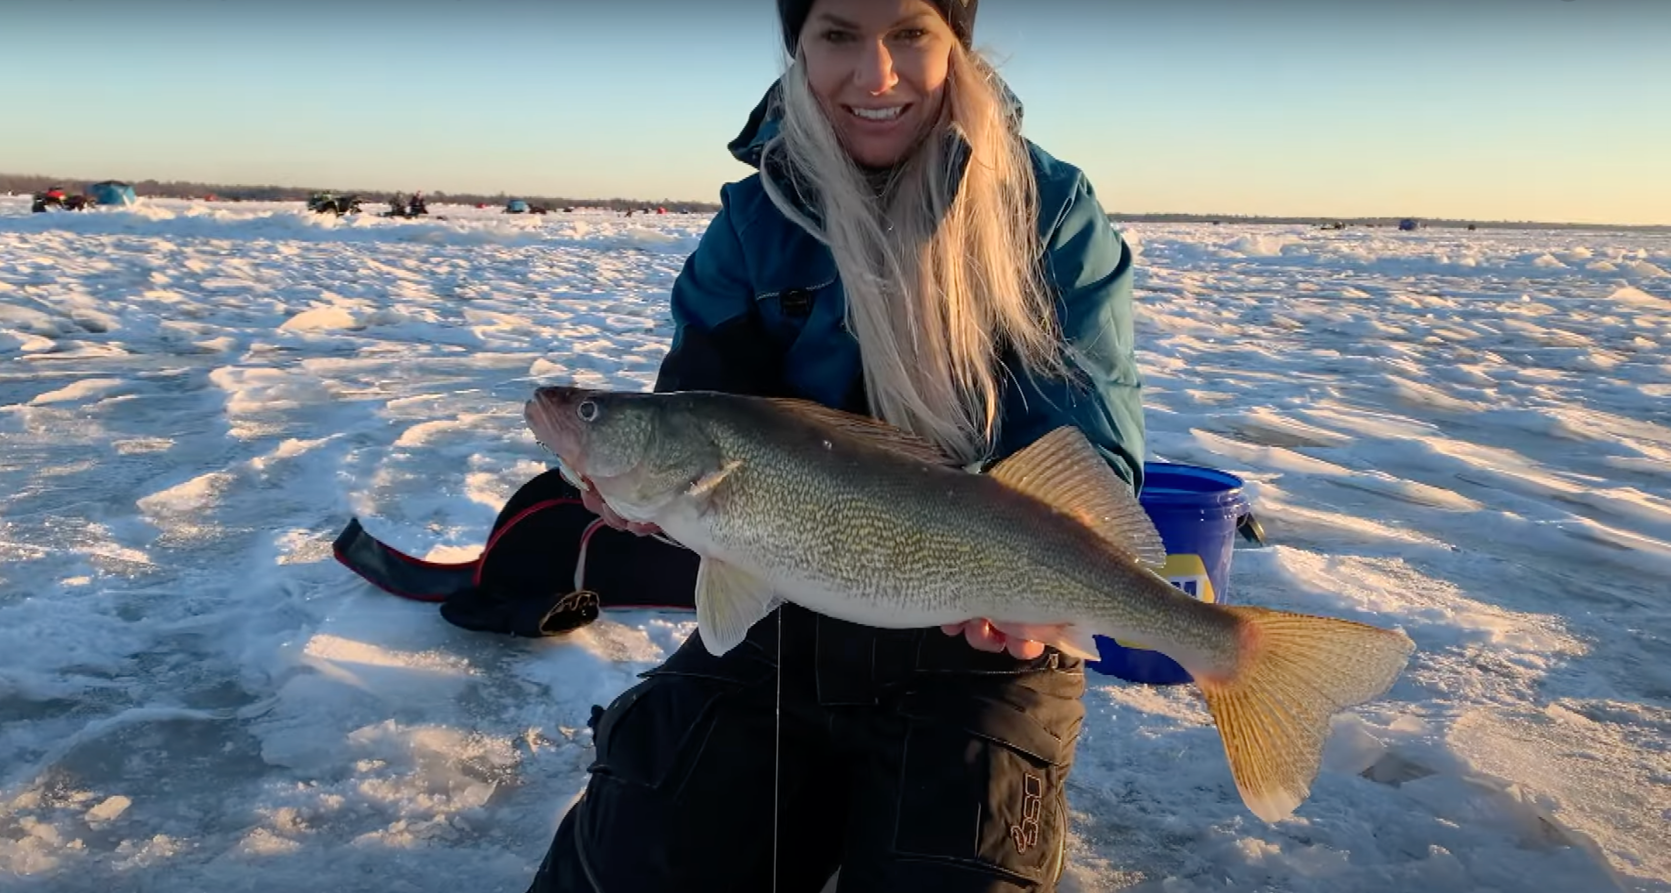 When winter goes big, ice fishermen go small